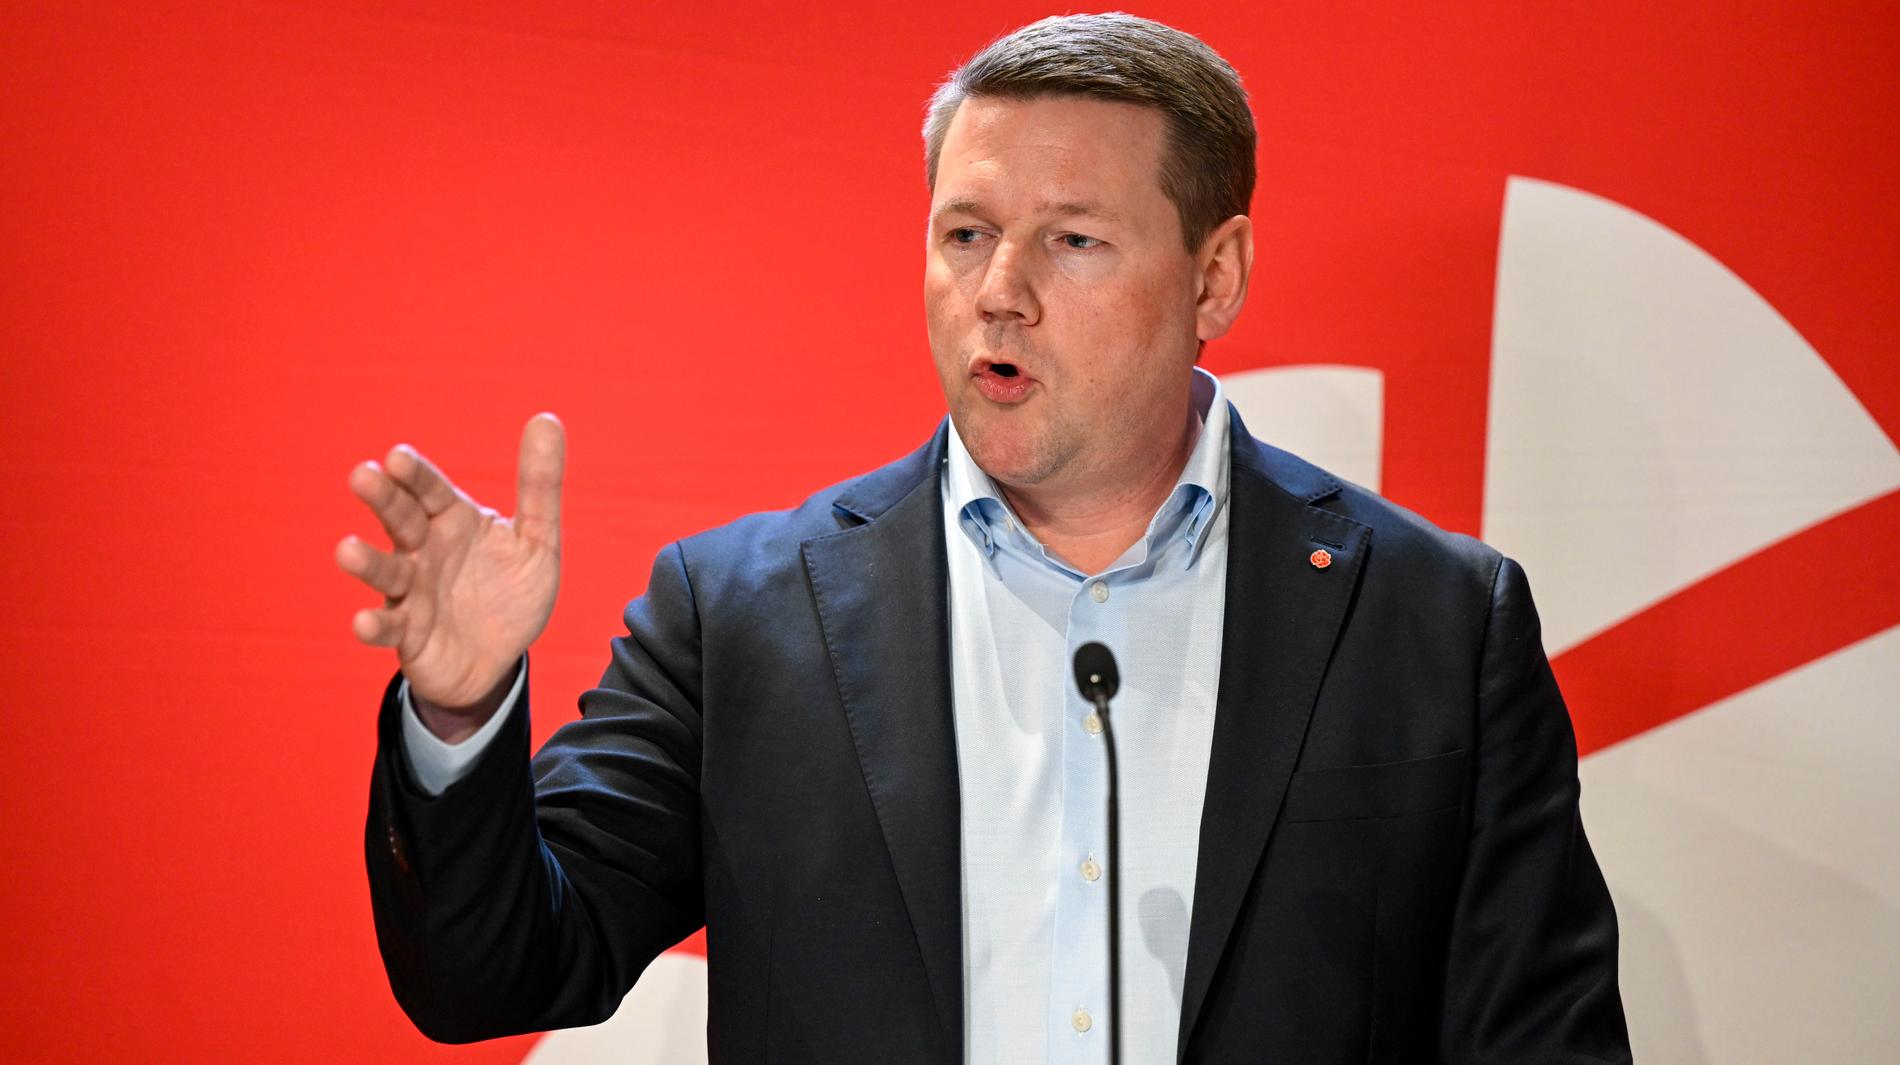 Socialdemokraternas partisekreterare Tobias Baudin.